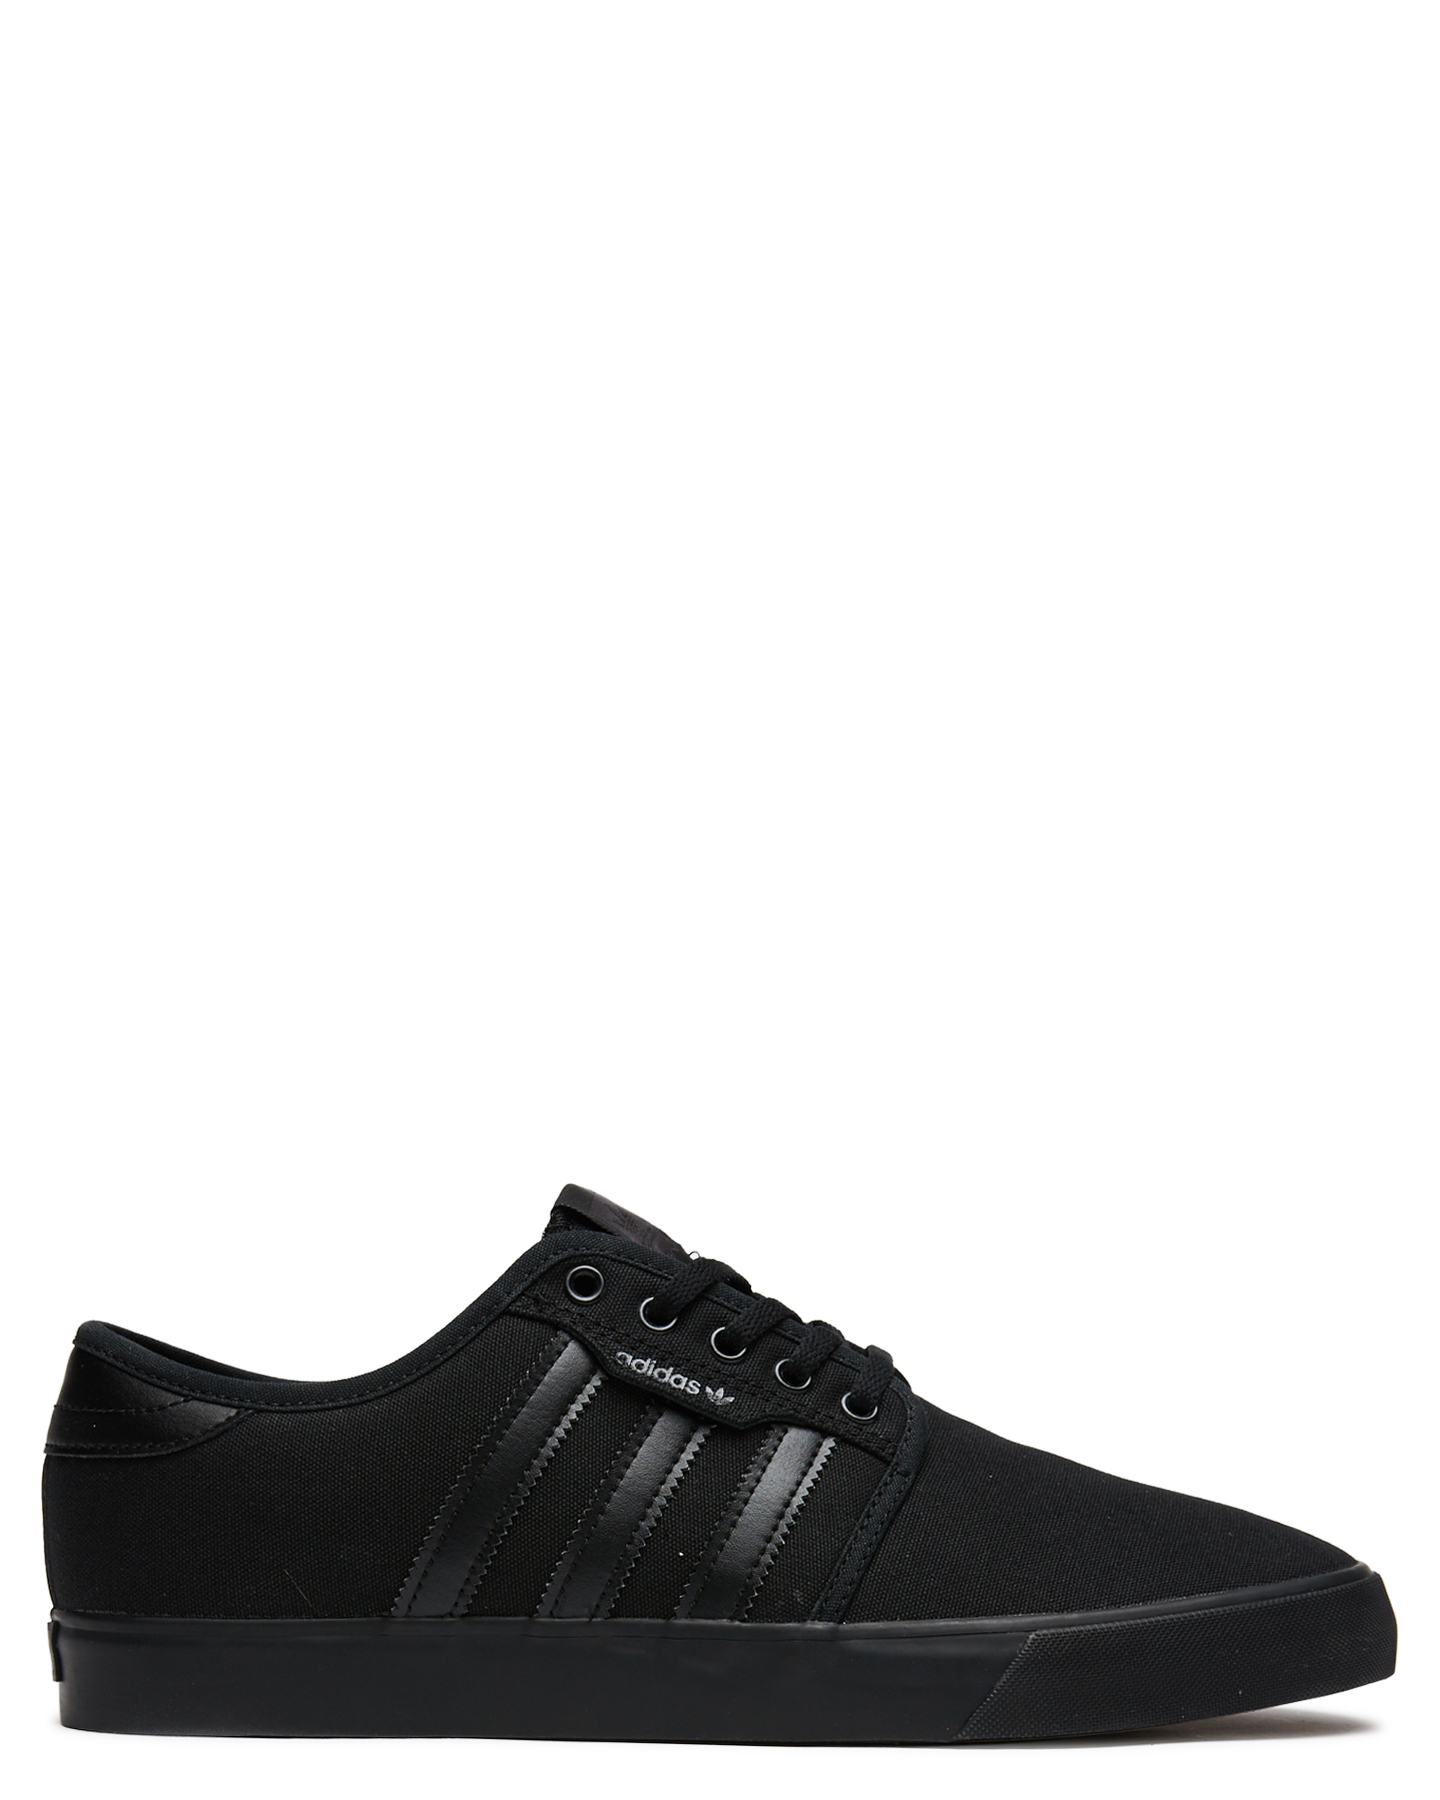 Adidas Mens Seeley Shoe - Black Black 